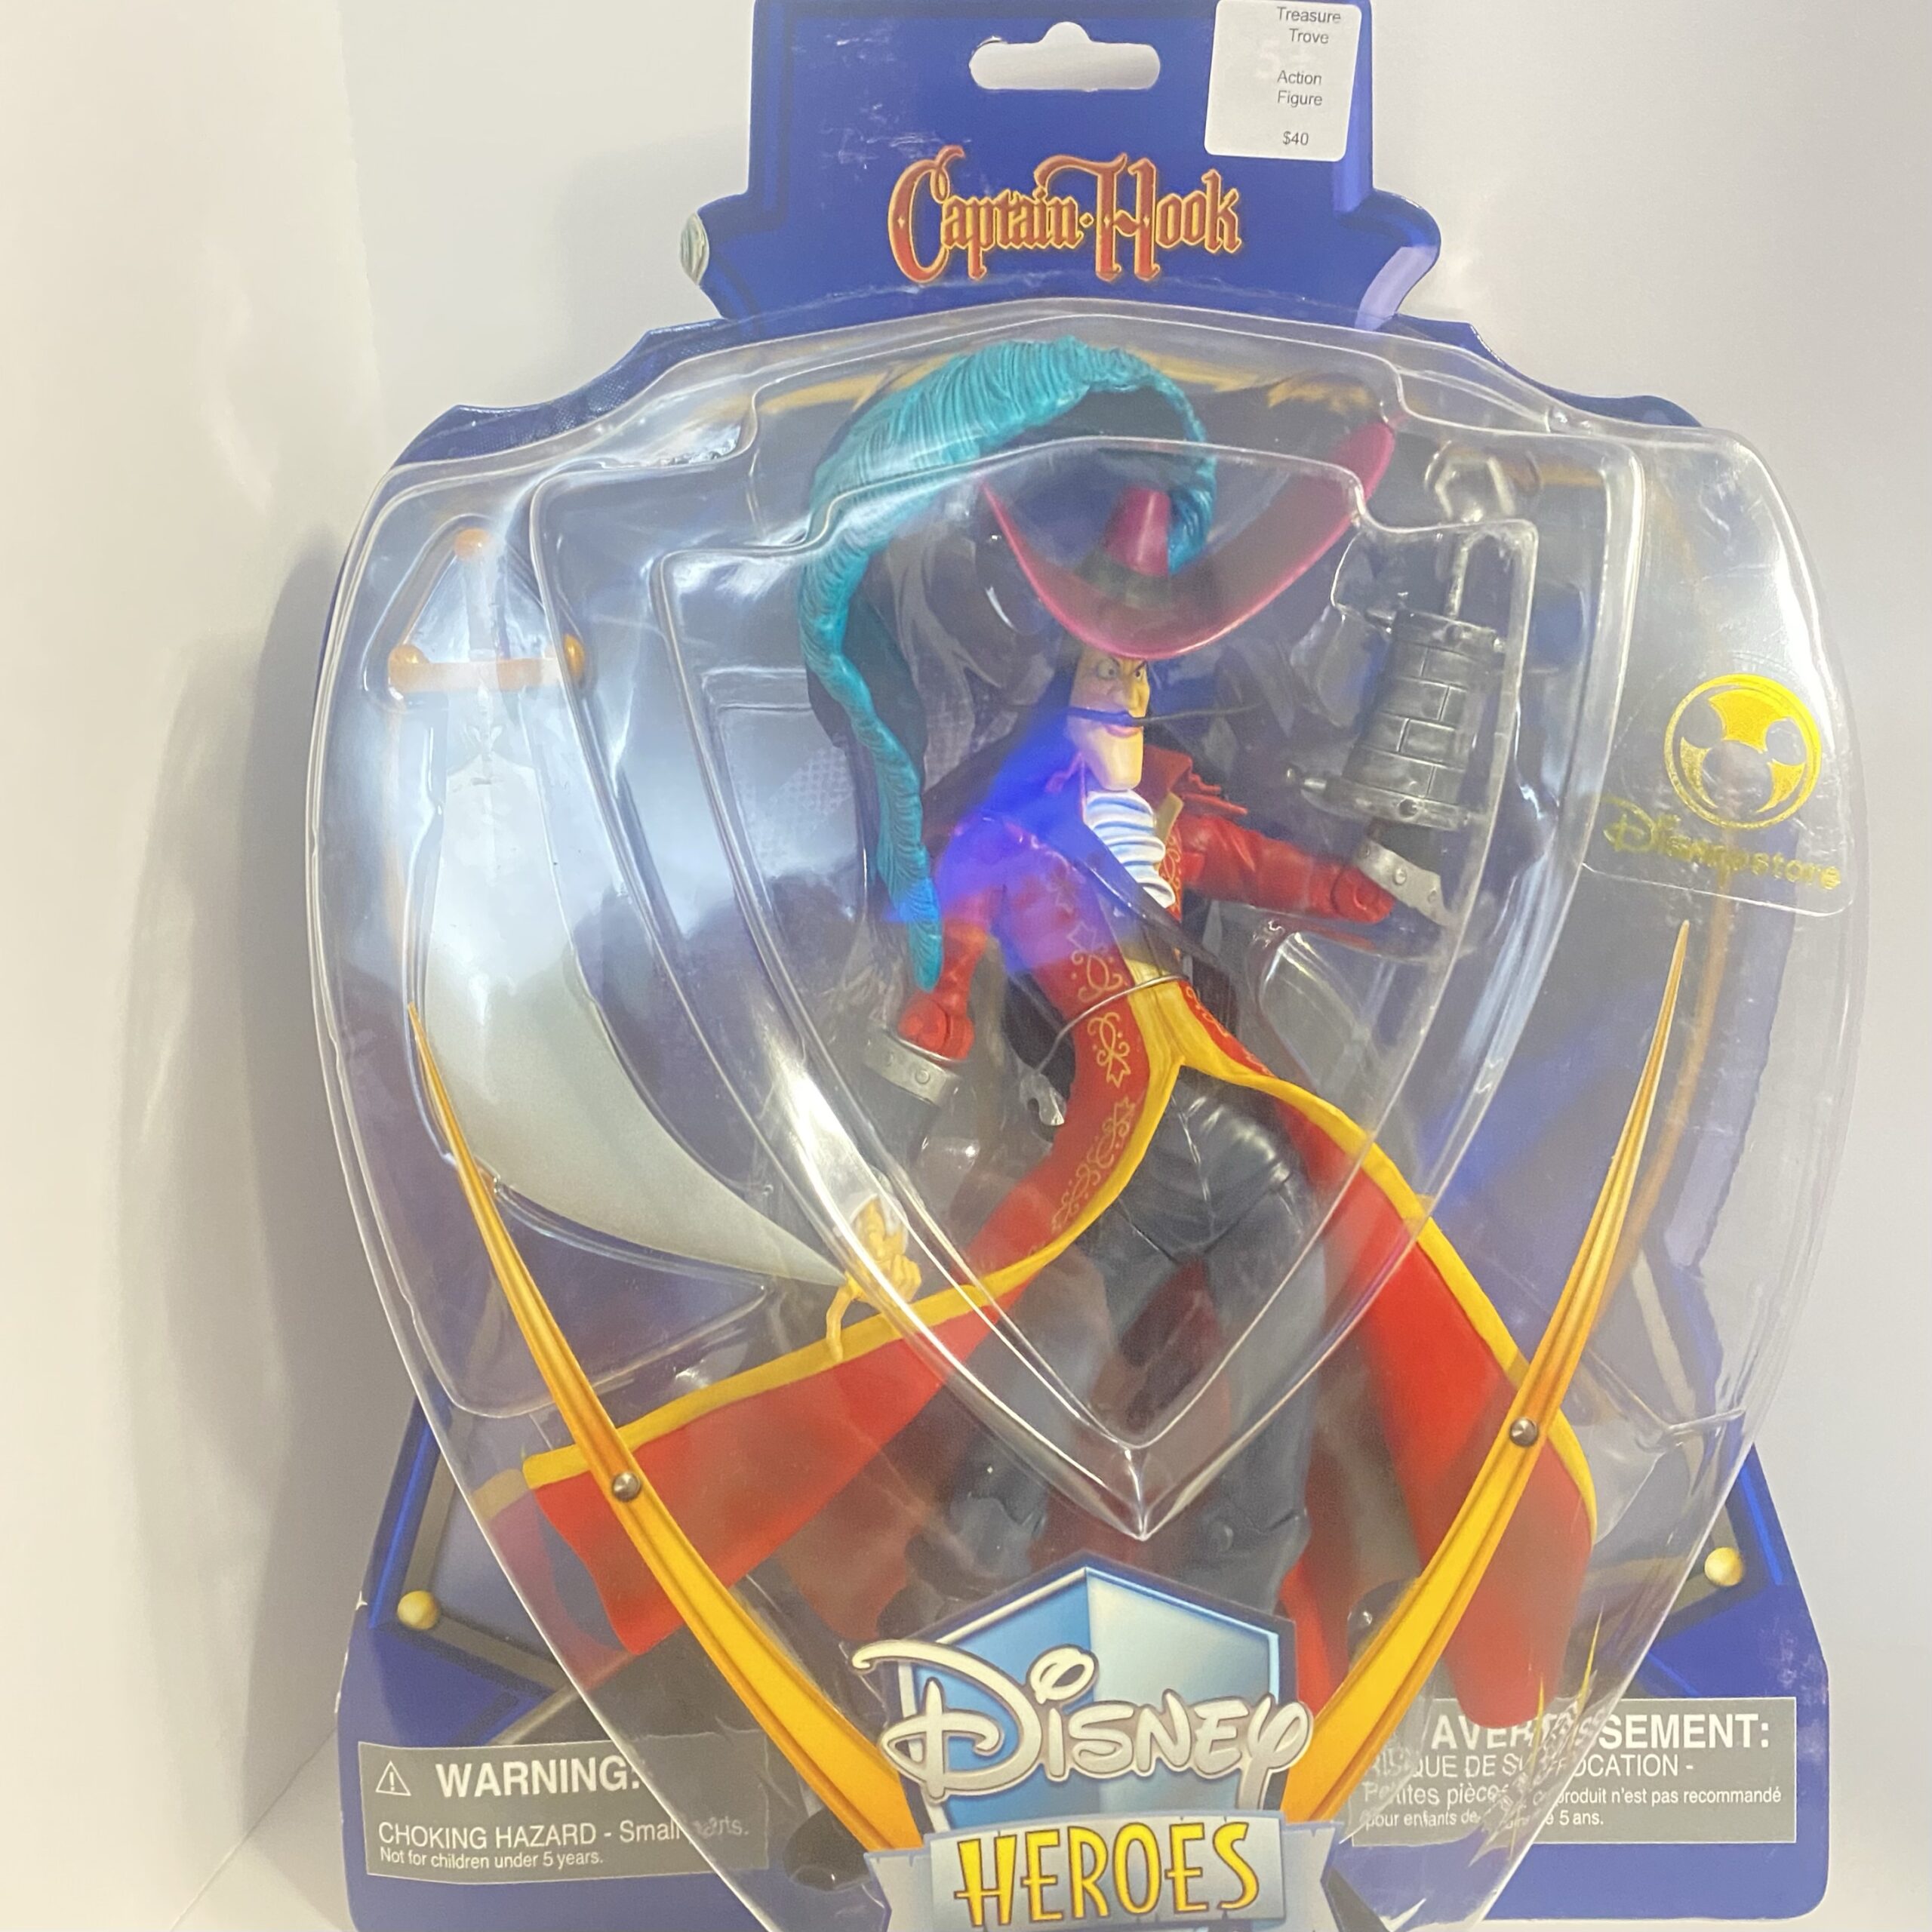 Disney Store Peter Pan Captain Hook Disney Heroes Action Figure Toy -  Treasure Trove Collectibles & Marketplace